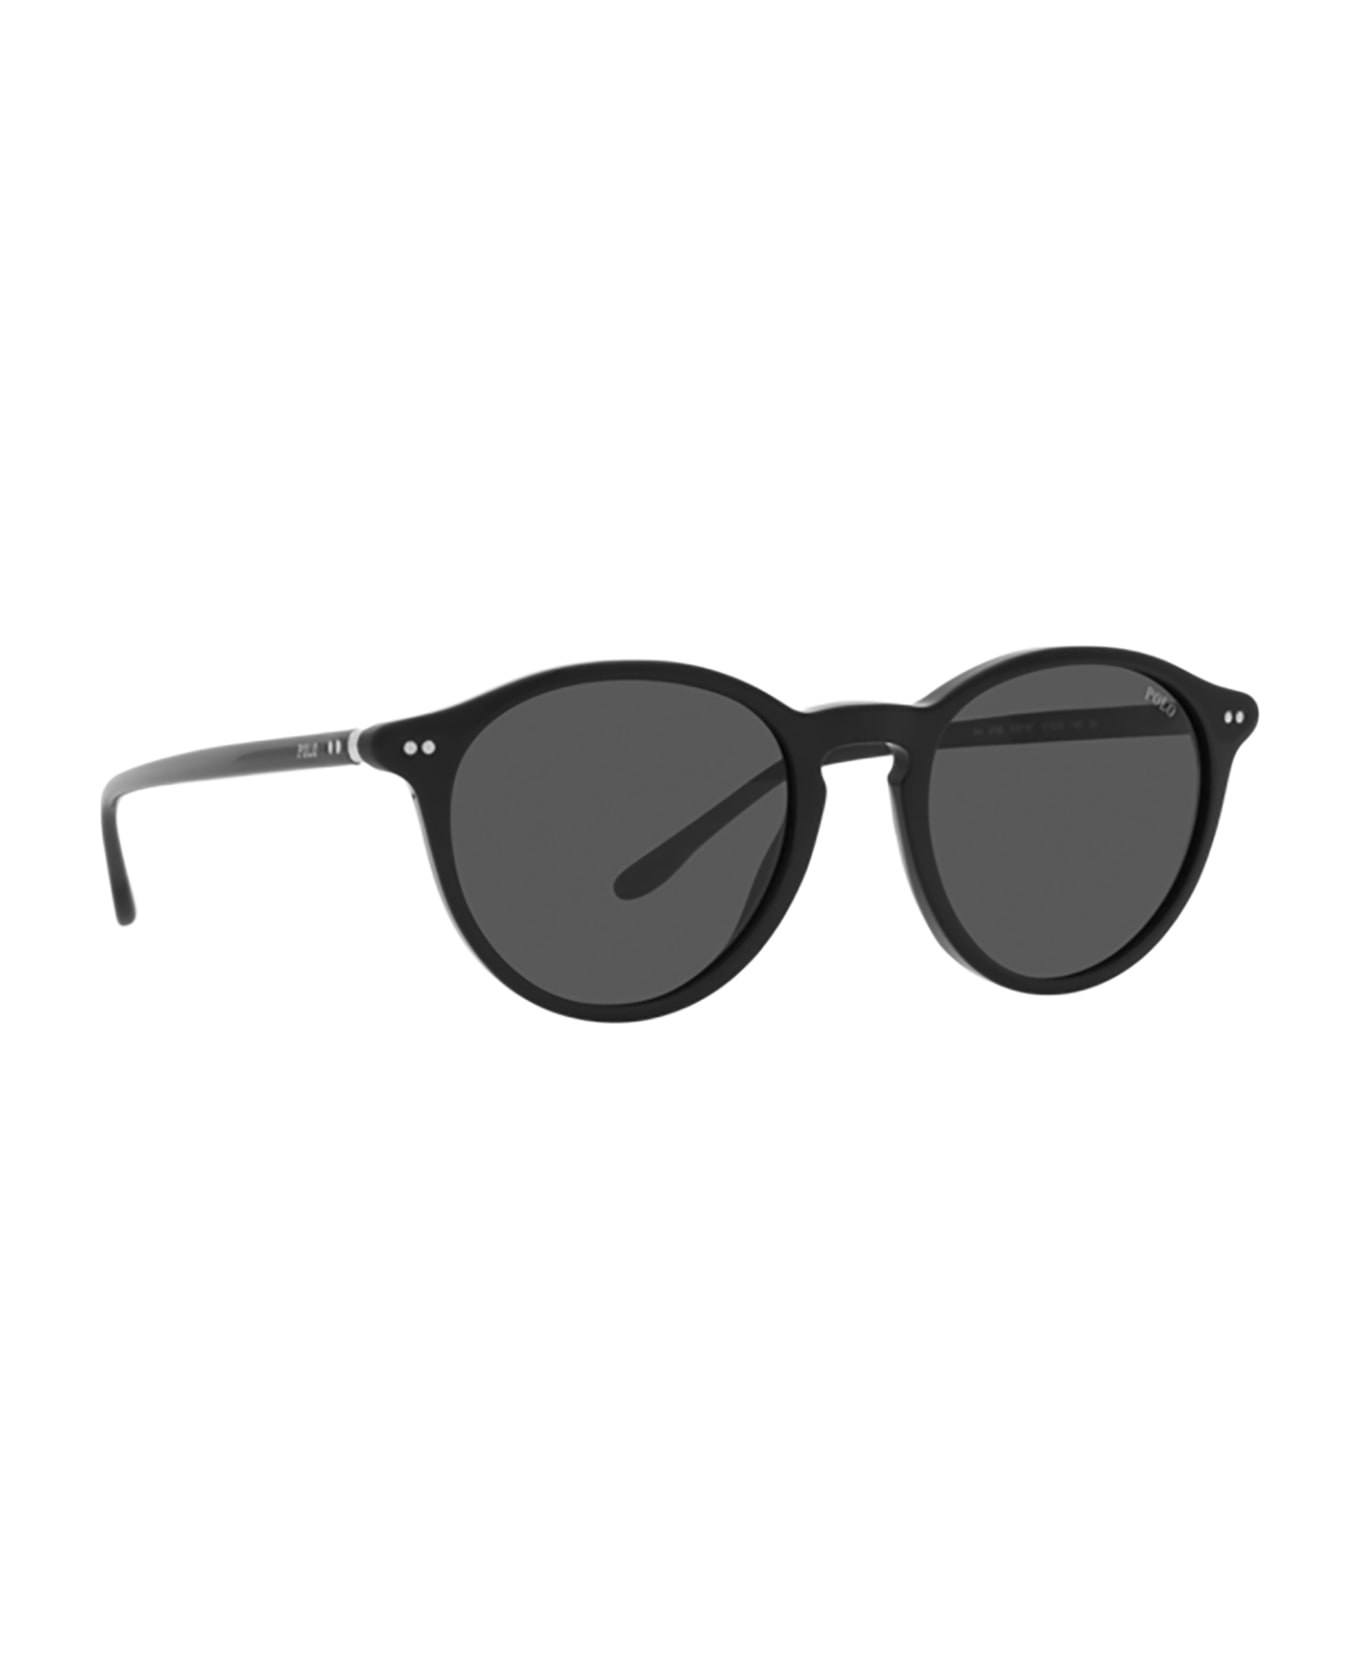 Polo Ralph Lauren Ph4193 Shiny Black Sunglasses - Shiny black